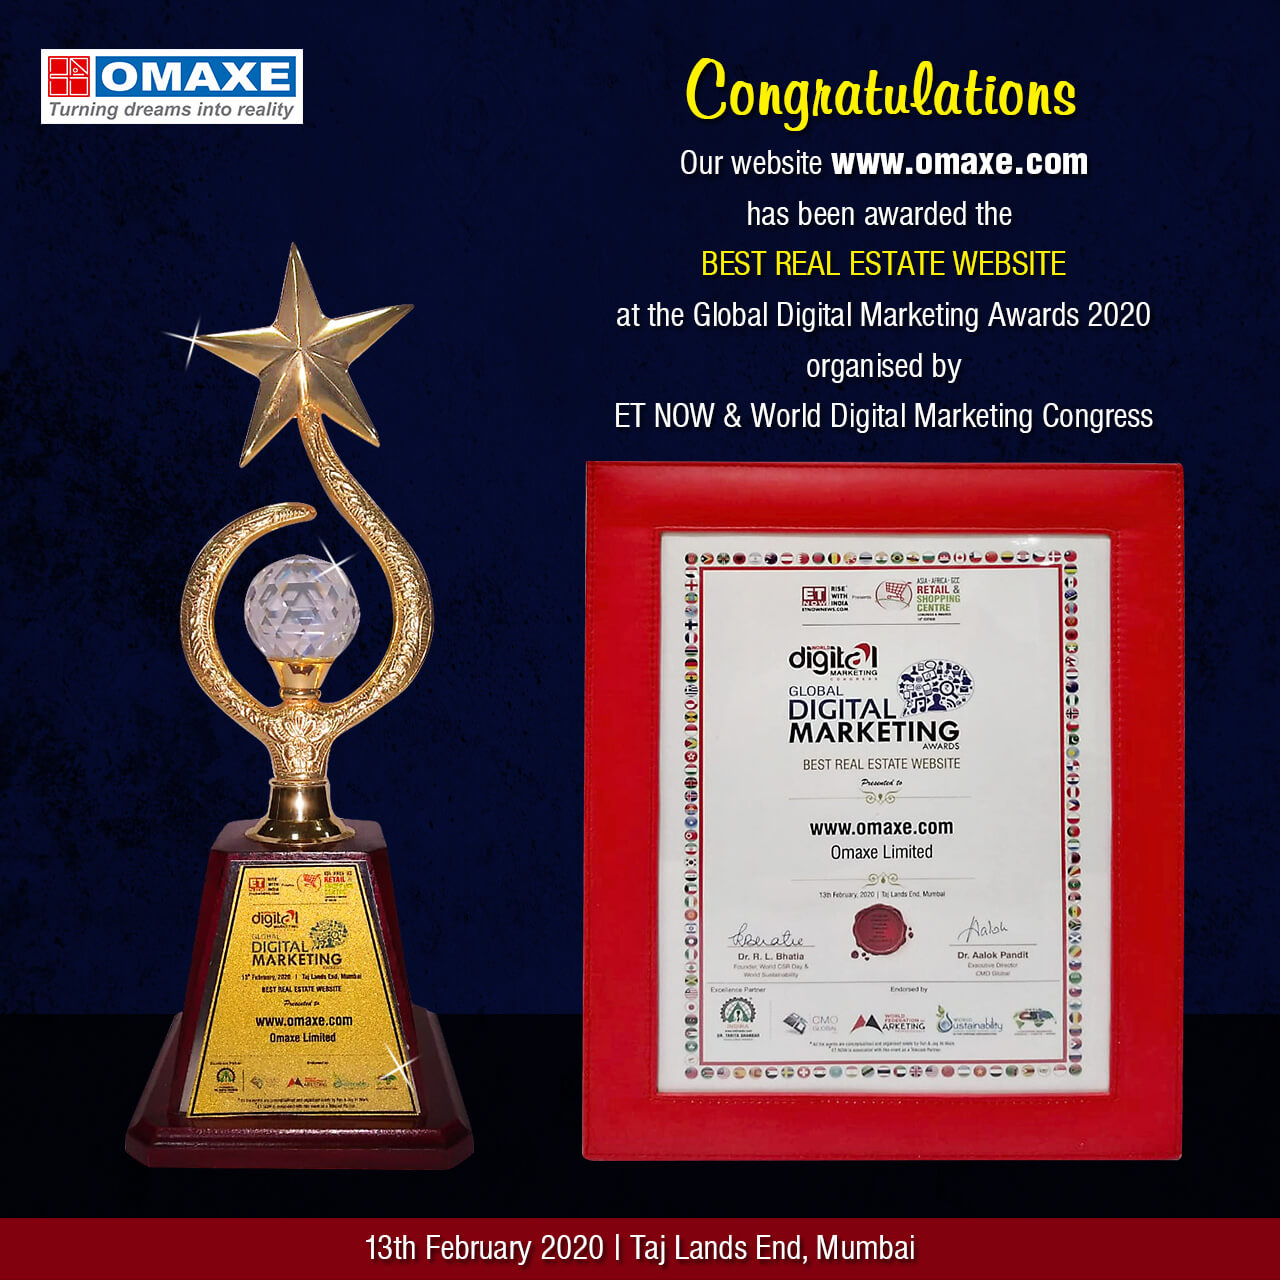 Omaxe website (www.omaxe.com) awarded the Best Real Estate Website at the Global Digital Marketing Awards 2020